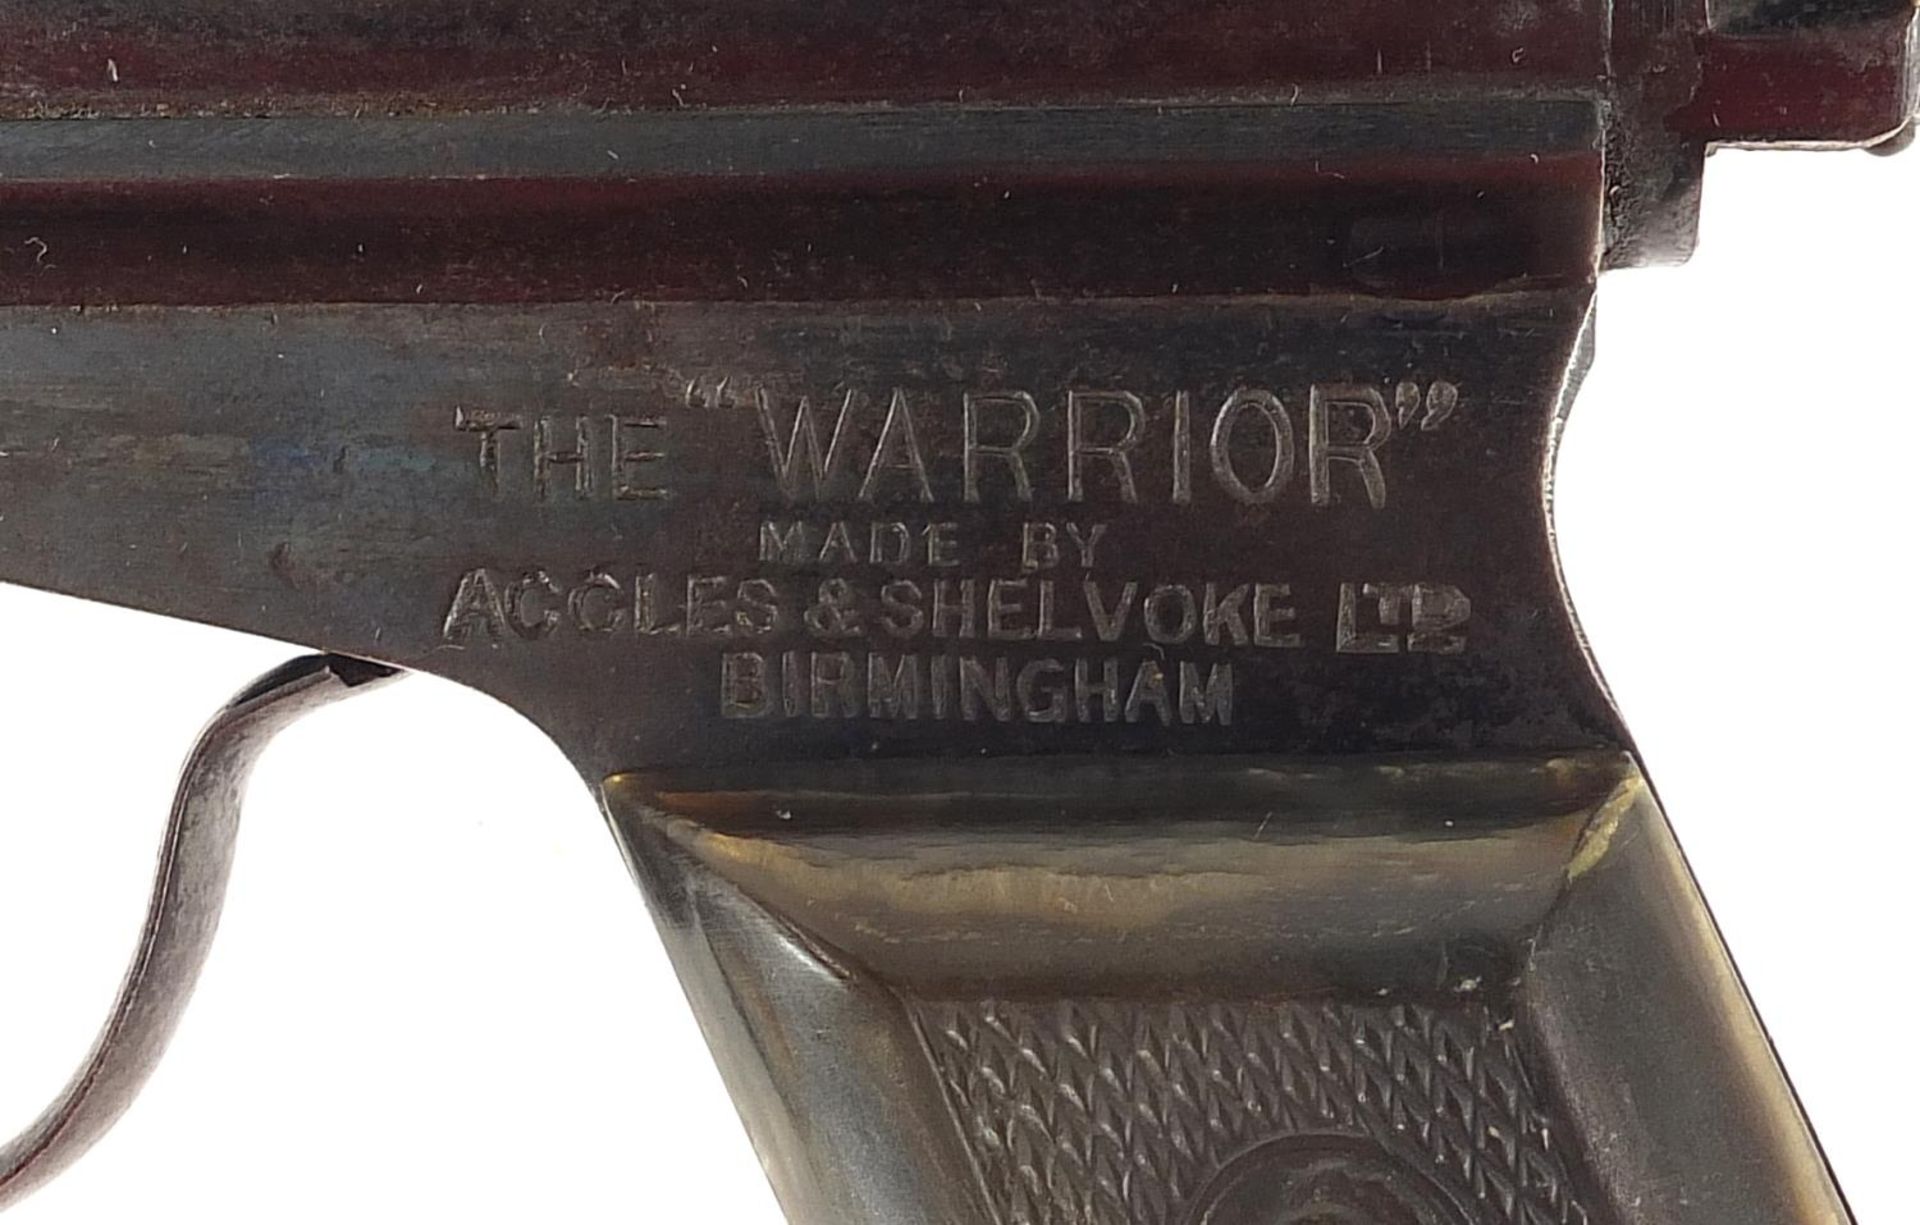 Vintage Accles & Shelvoke Ltd Warrior side lever air pistol, F.Clerks Patent, 19cm in length :For - Image 2 of 6